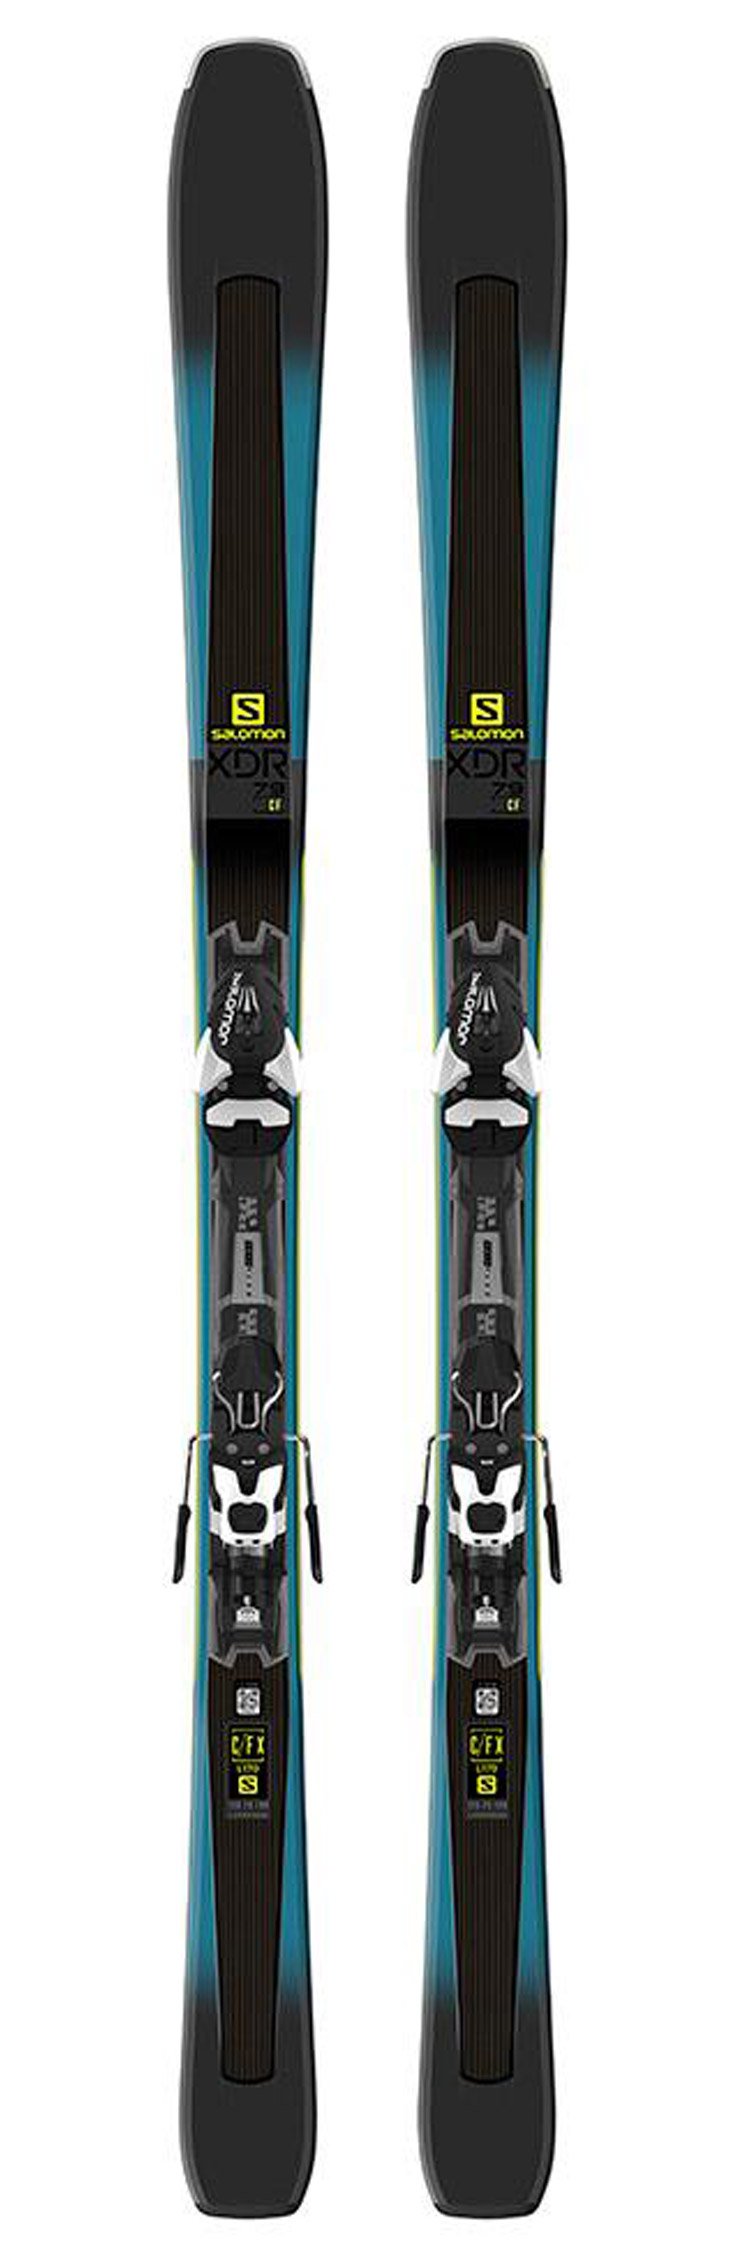 Salomon Alpine ski set XDR 79 CF + 